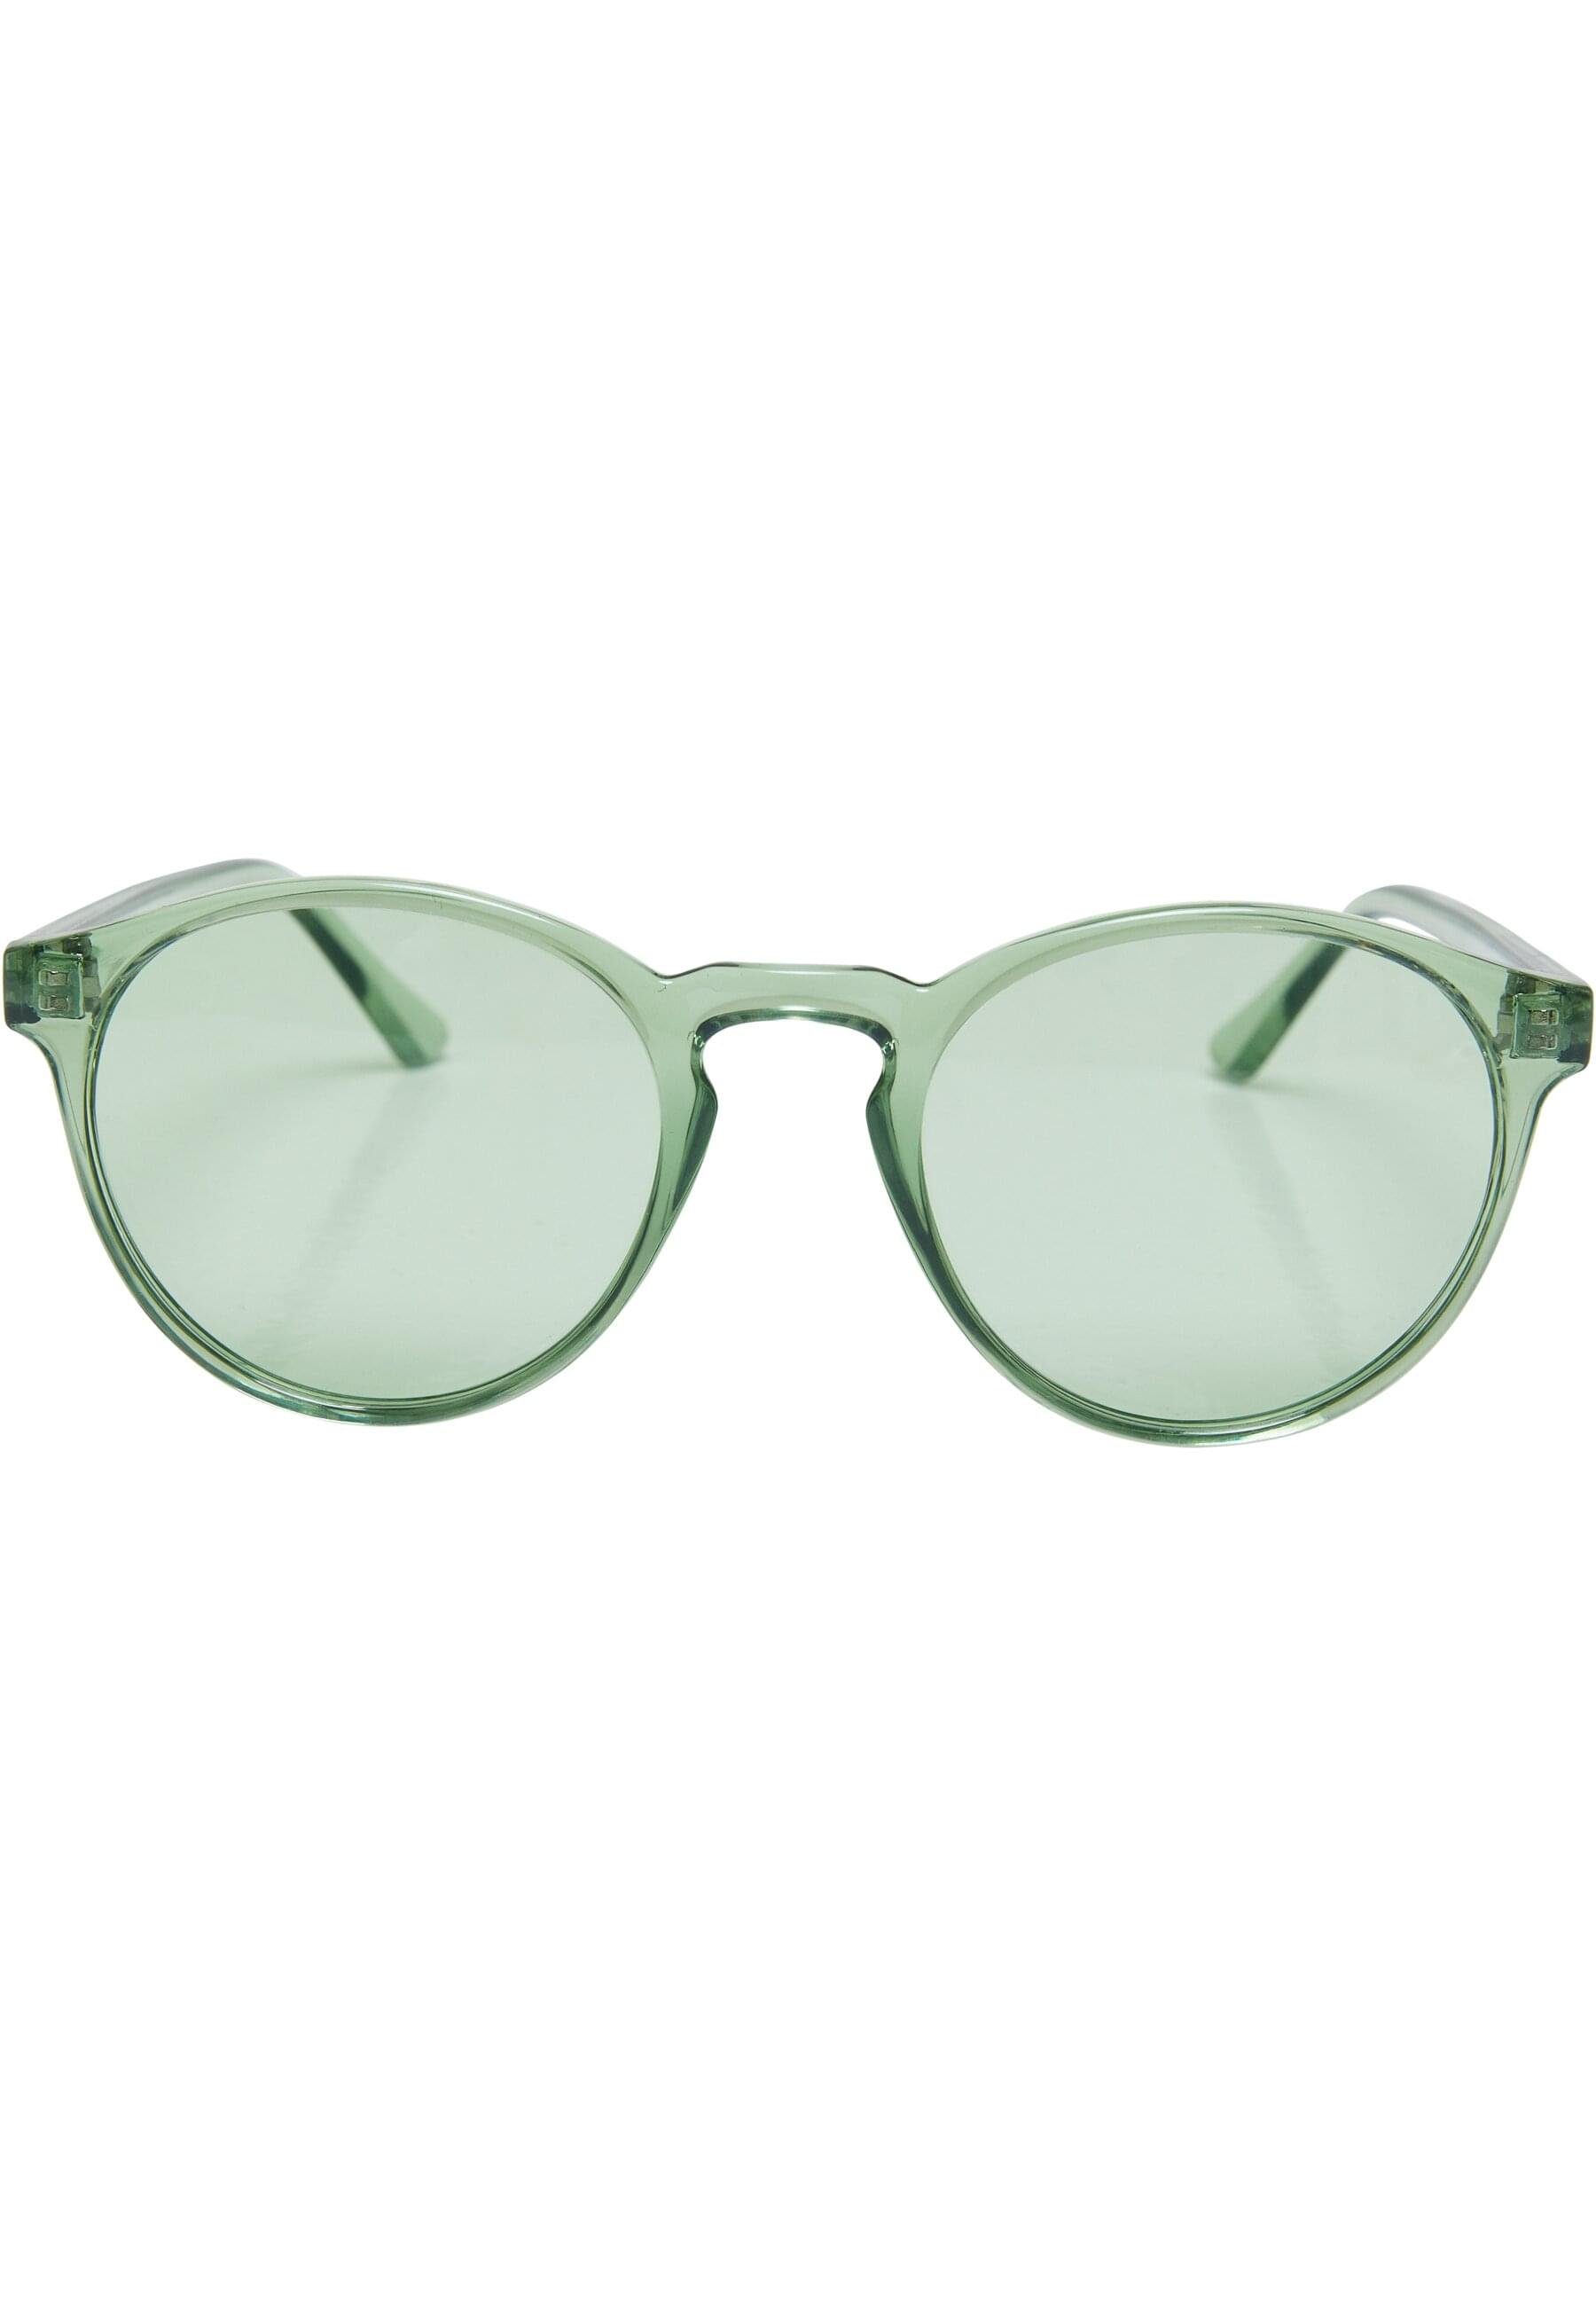 CLASSICS Sunglasses URBAN black/palepink/vintagegreen 3-Pack Sonnenbrille Cypress Unisex